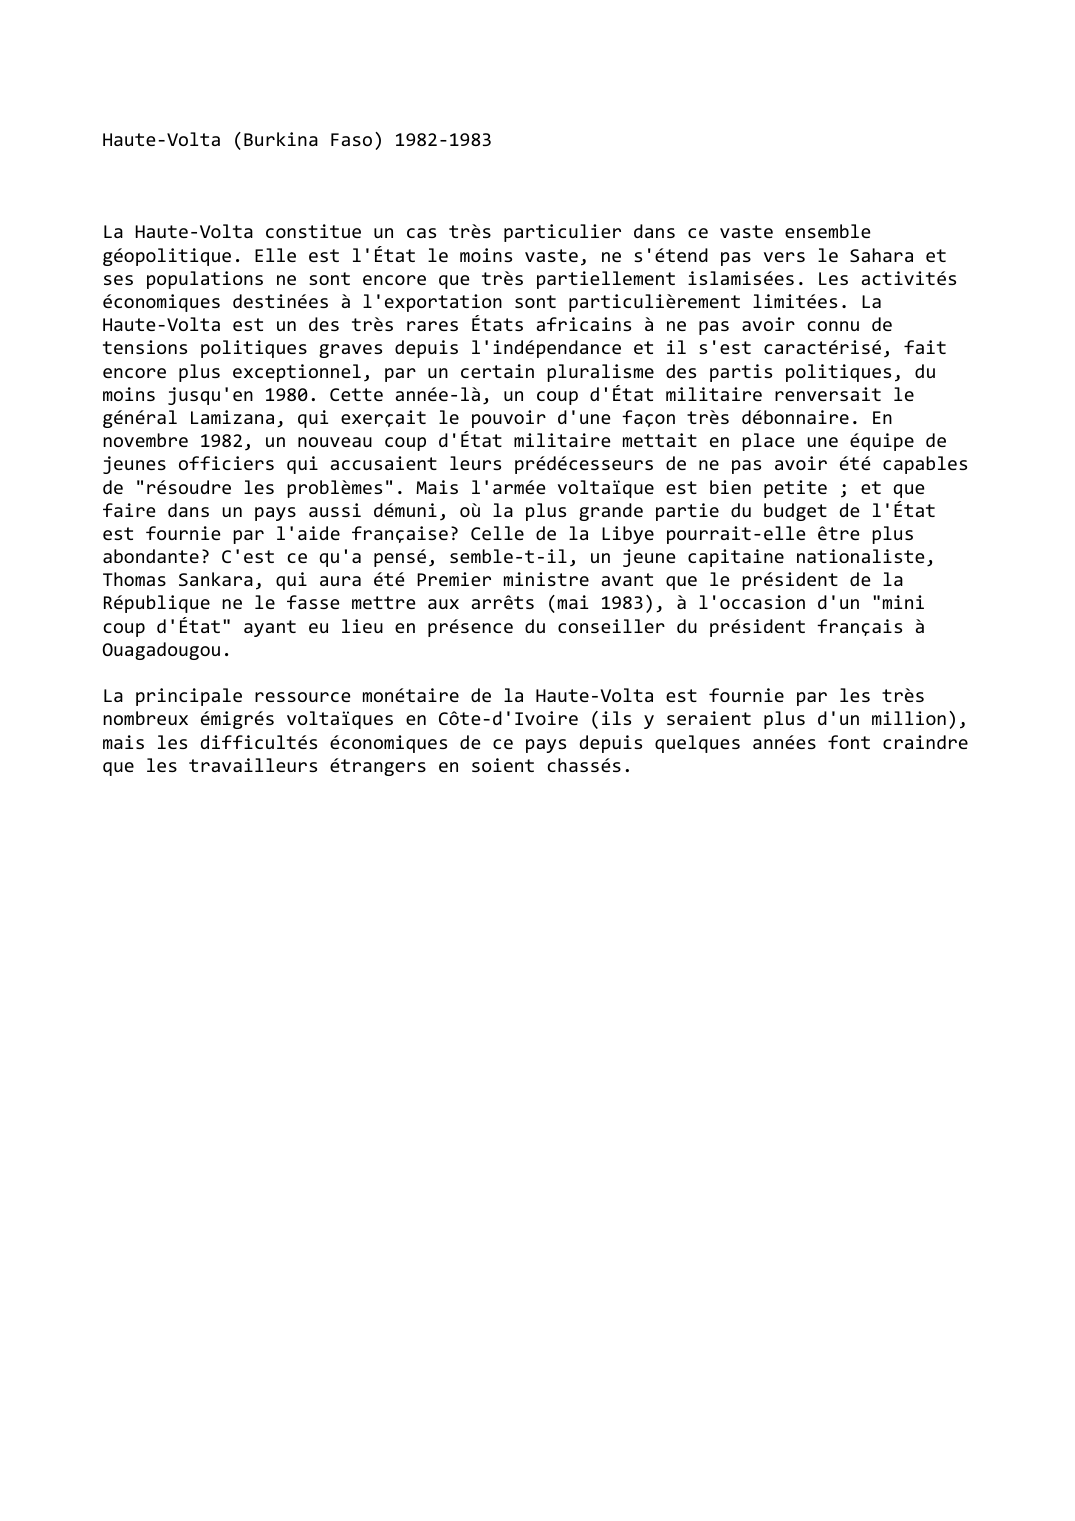 Prévisualisation du document Haute-Volta (Burkina Faso) 1982-1983